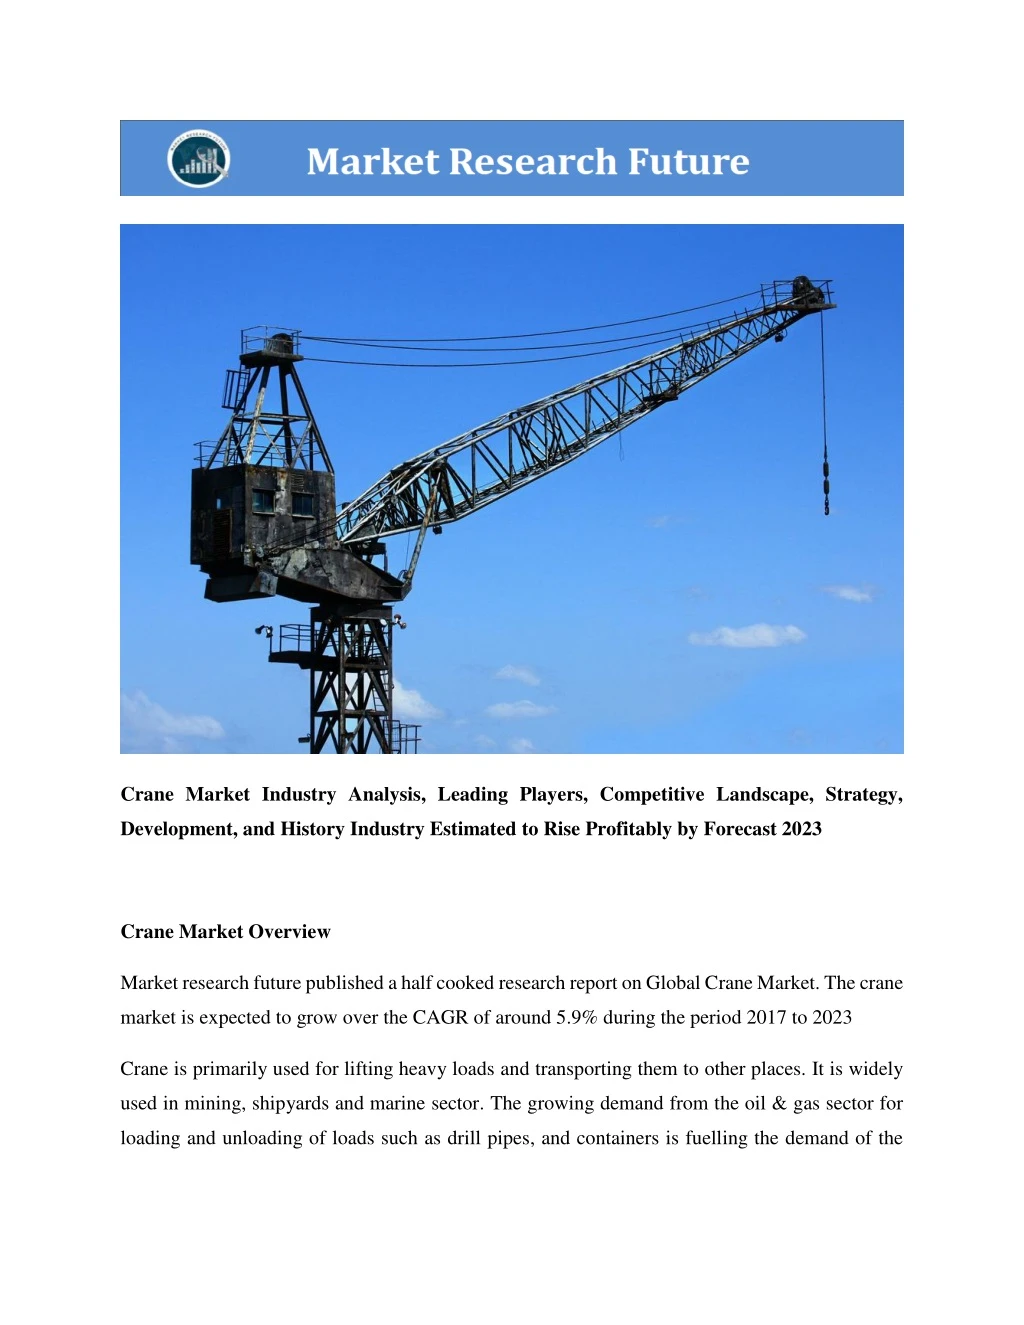 crane market industry analysis leading players